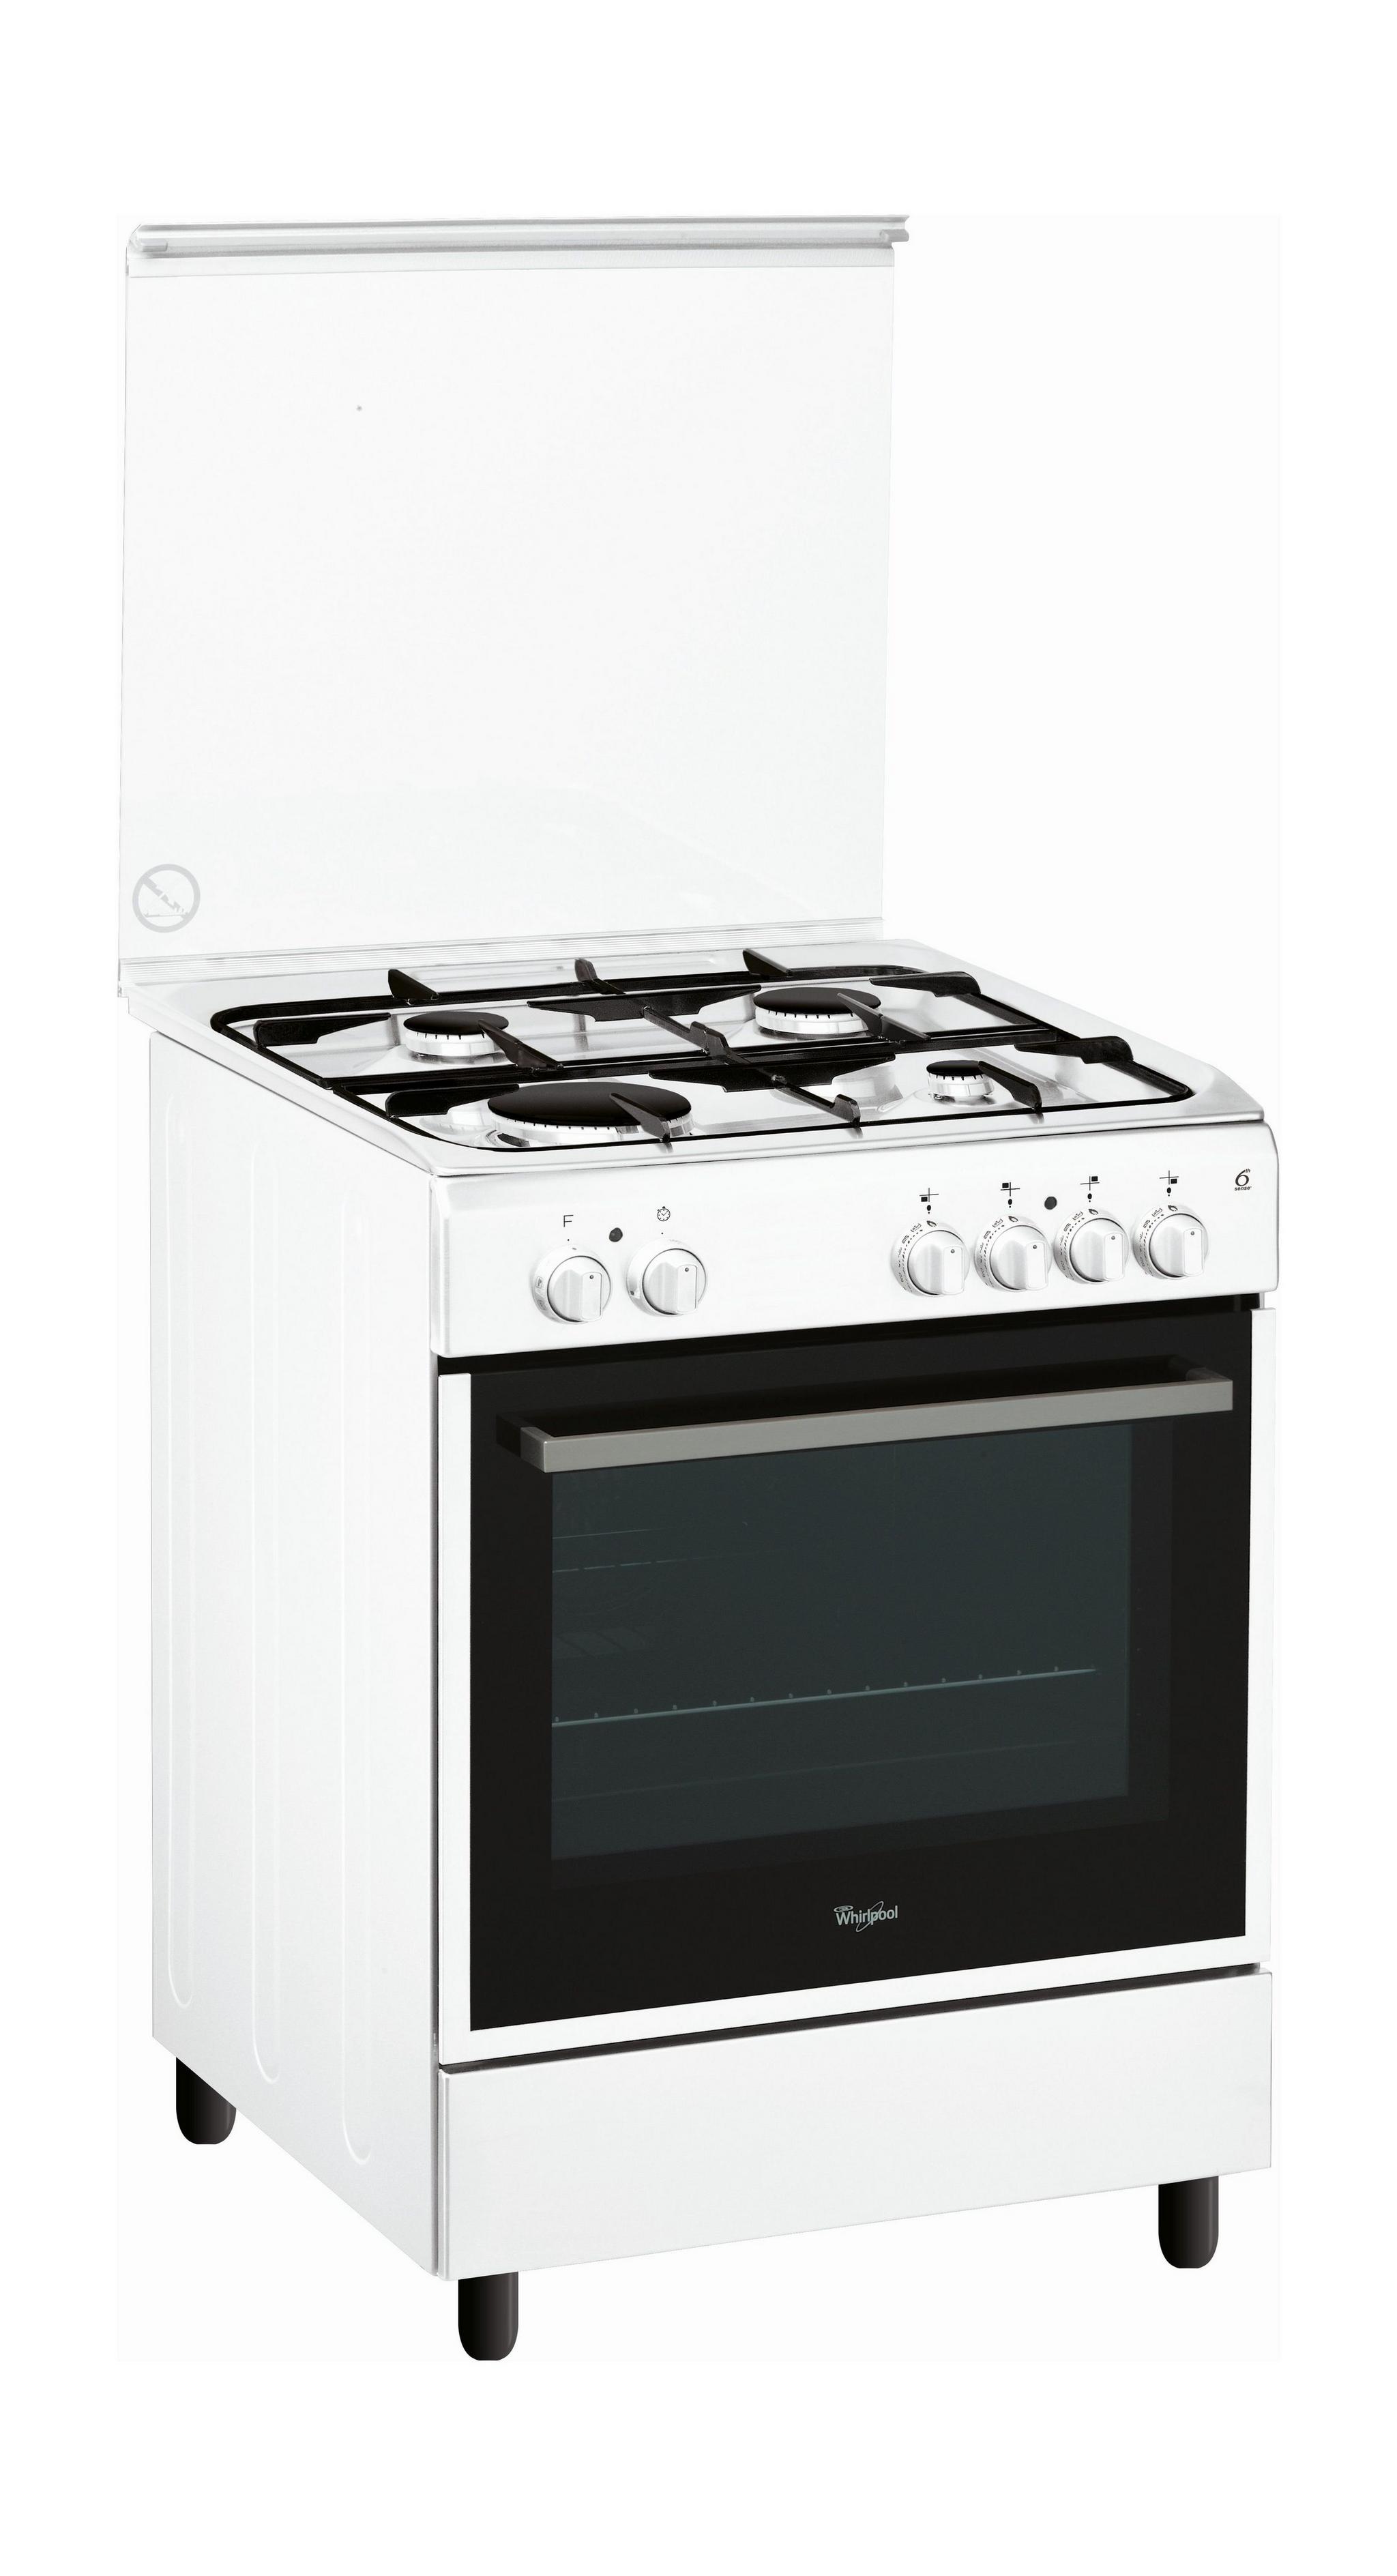 Whirlpool 60x60cm 4 Burners Floor Standing Gas Cooker (ACMK 6110) – White